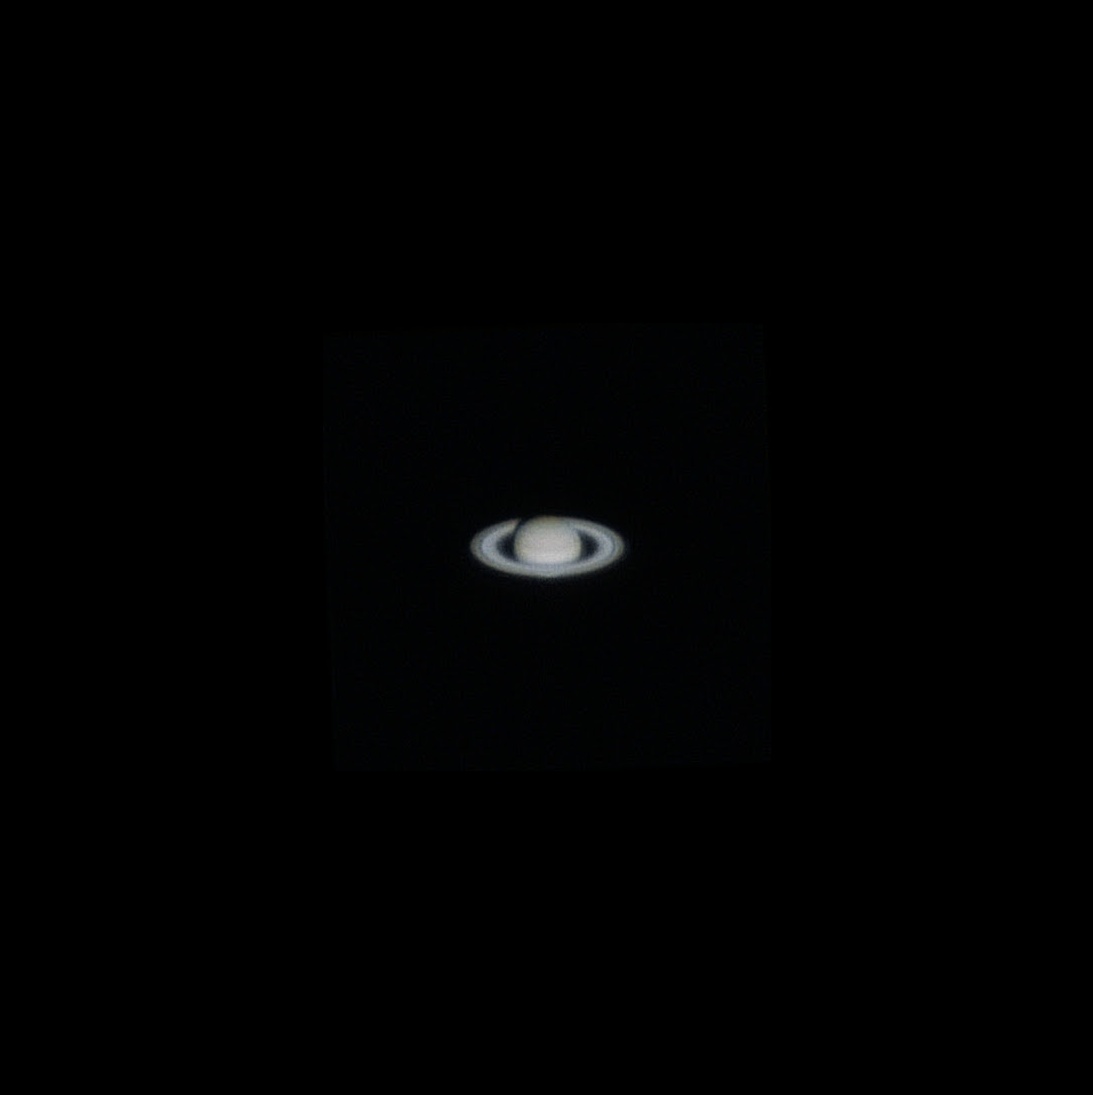 Saturn in distancing itself...